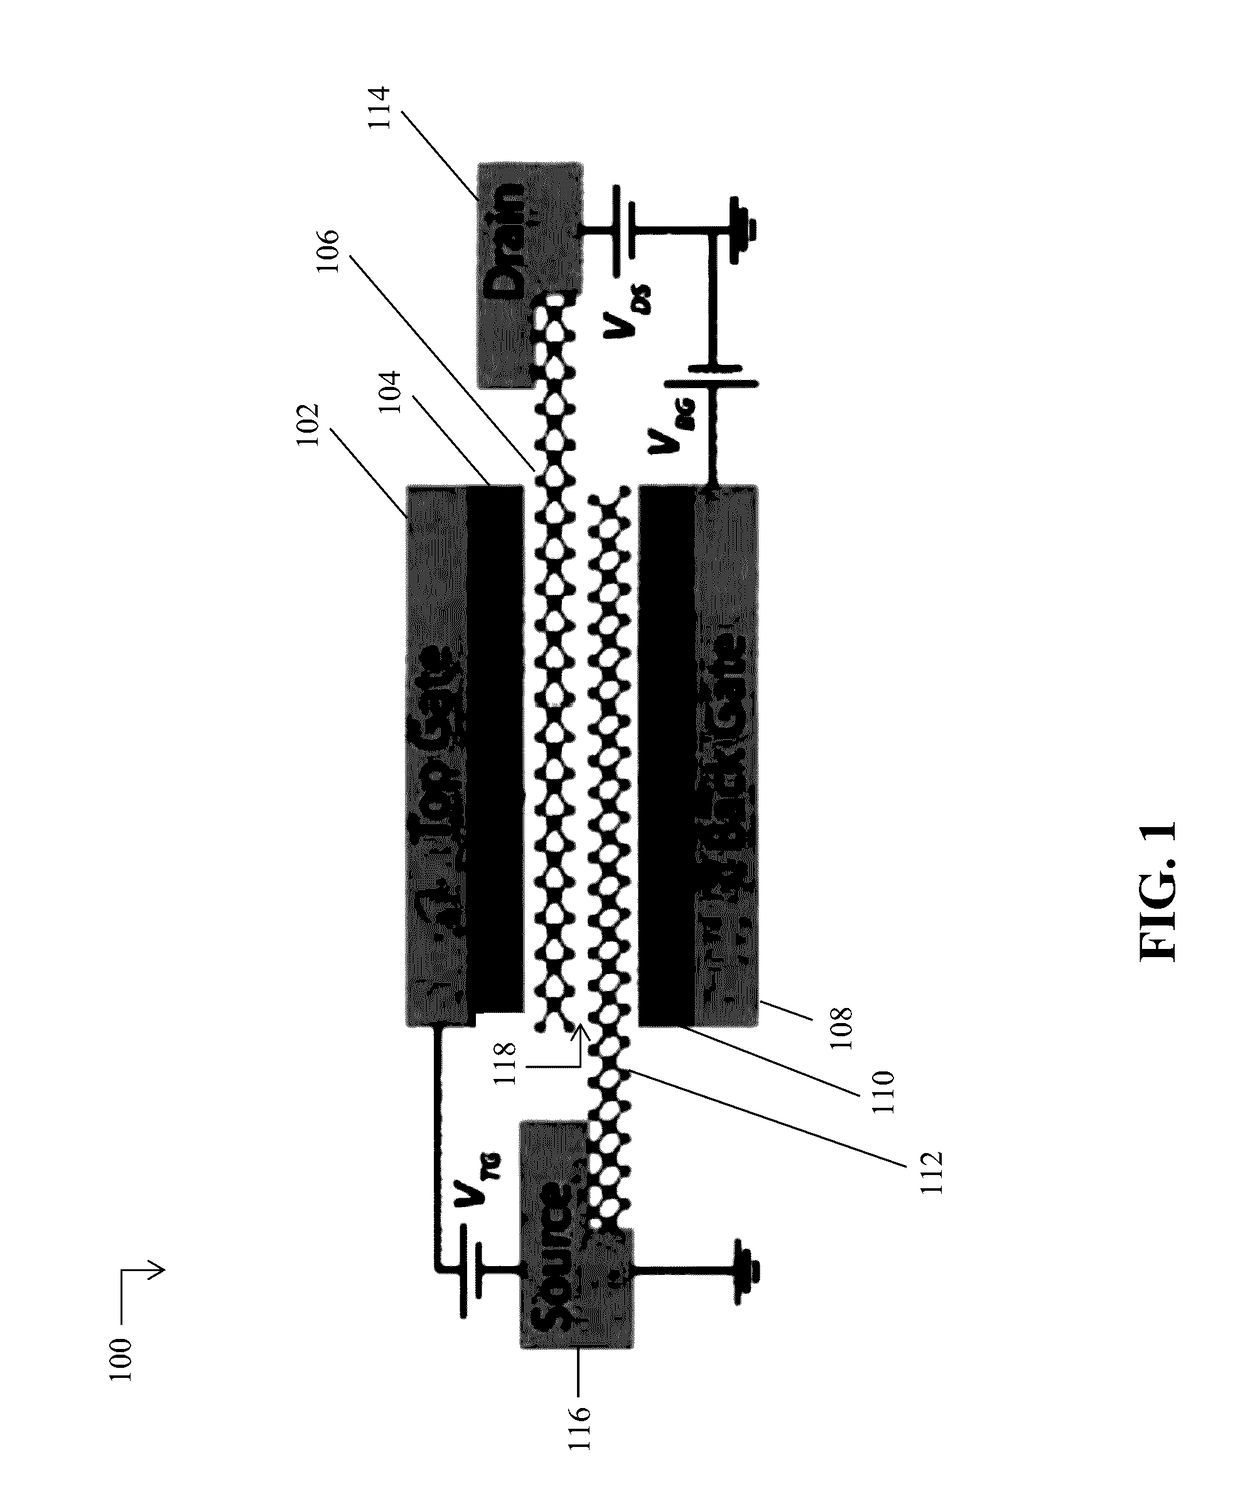 Two-dimensional heterojunction interlayer tunneling field effect transistors